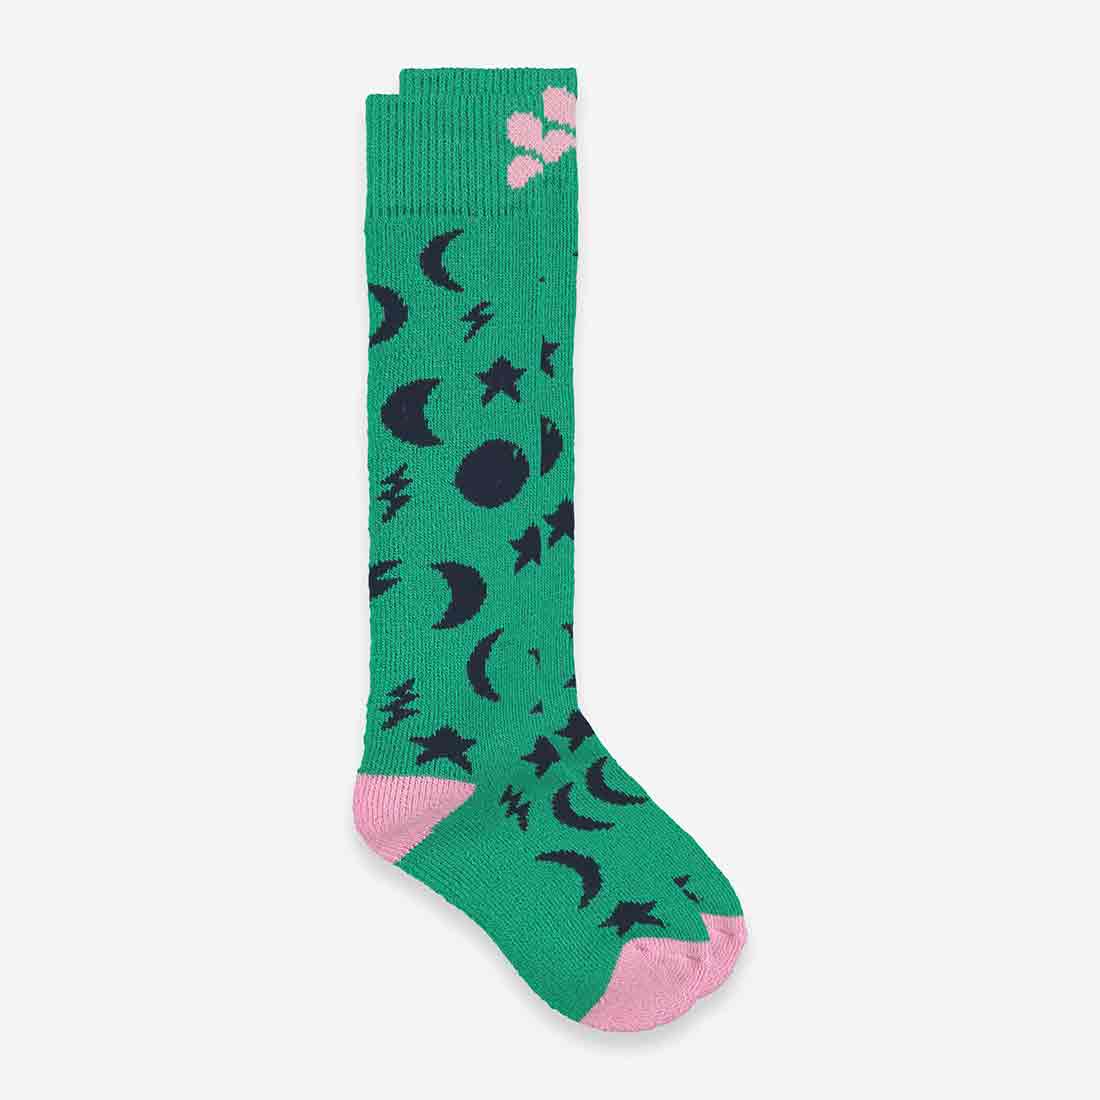 Puddlestomper Socks Green